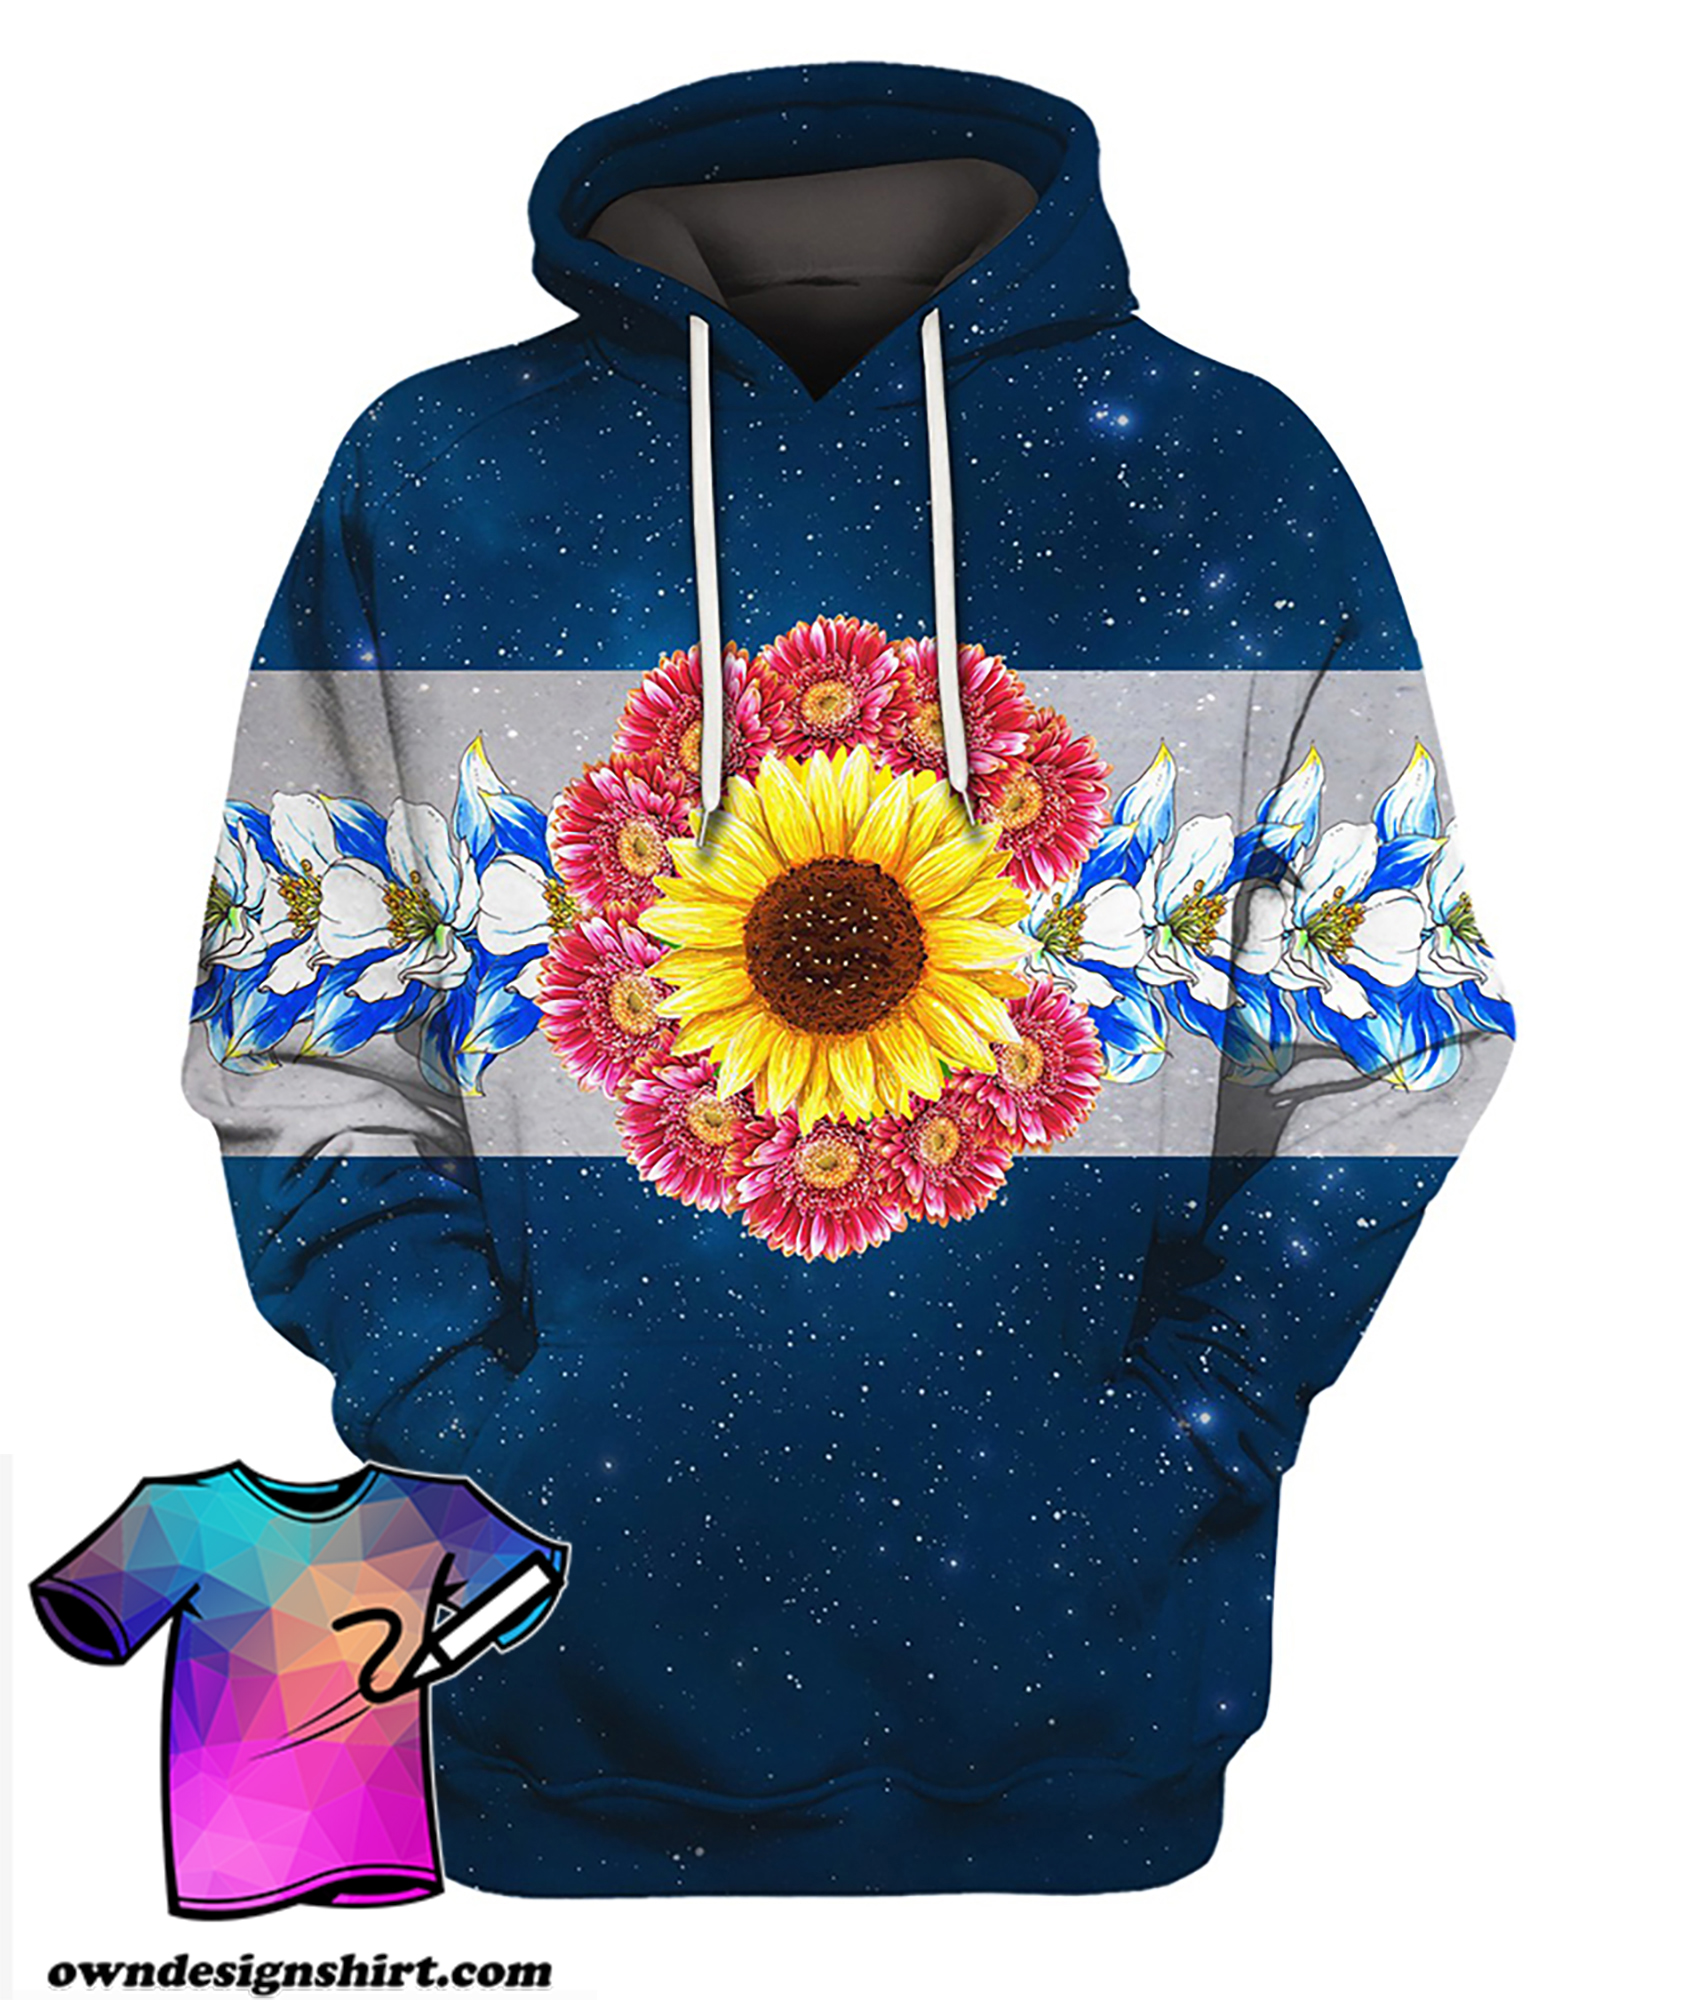 Flower galaxy full printing shirt